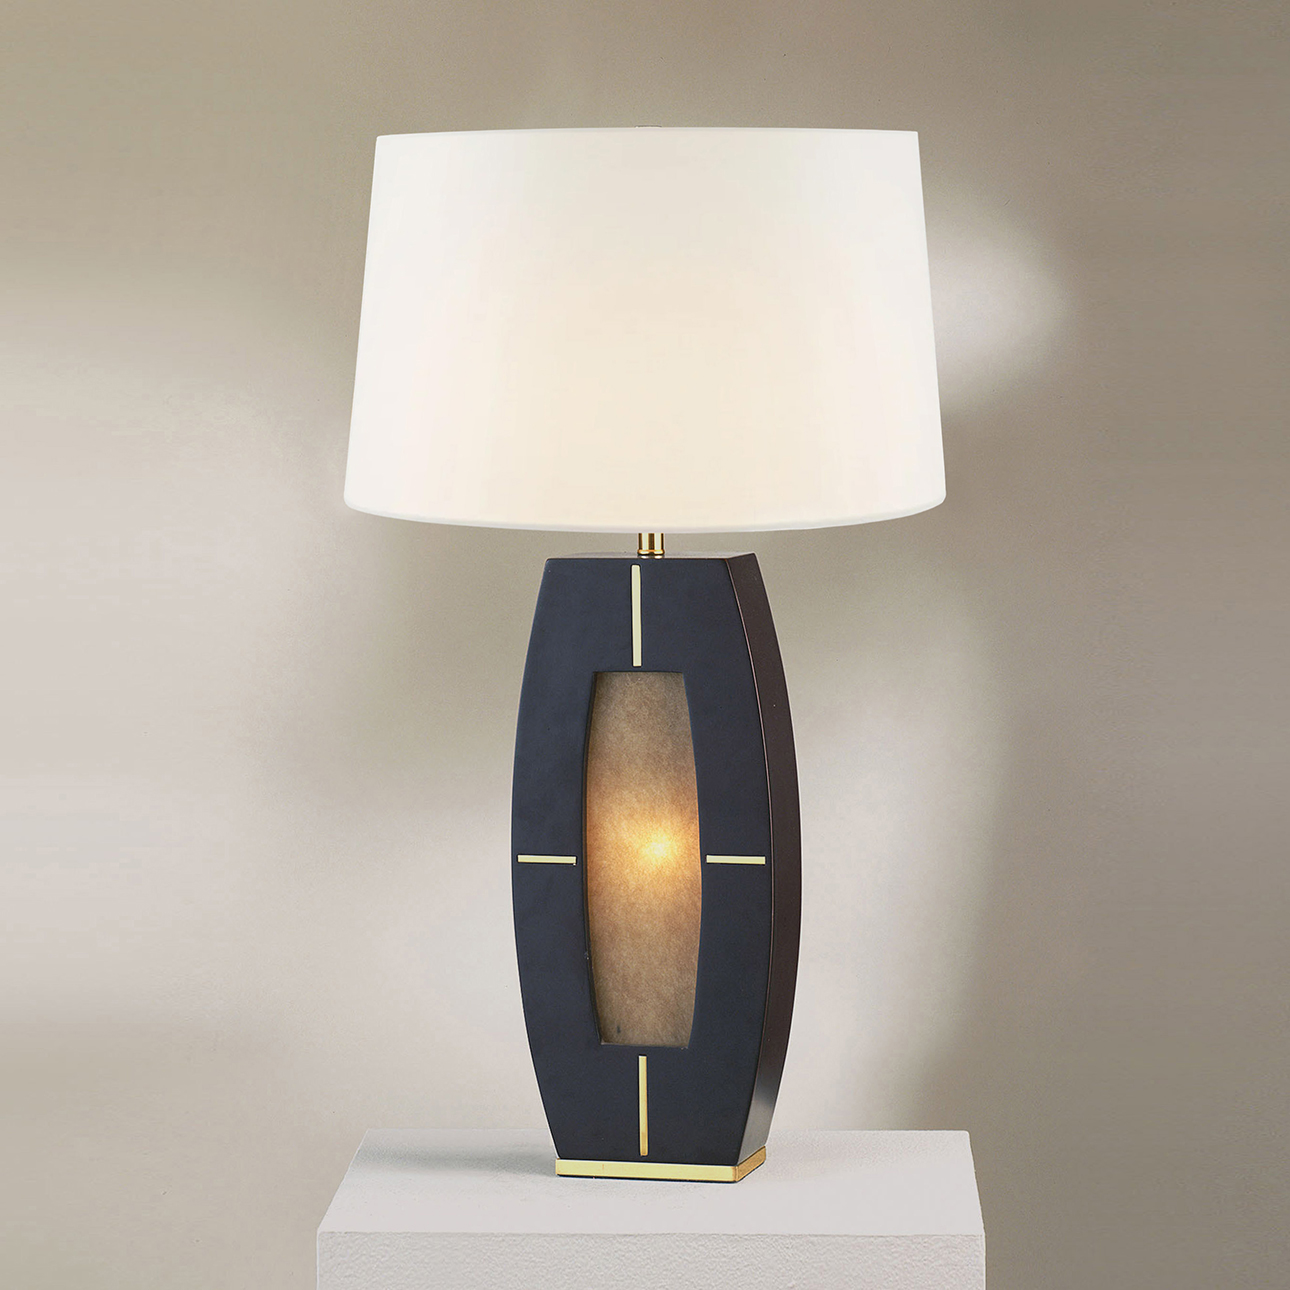 Nova of California Delacey Table Lamp - Mid-Century Modern Design, Black Finish